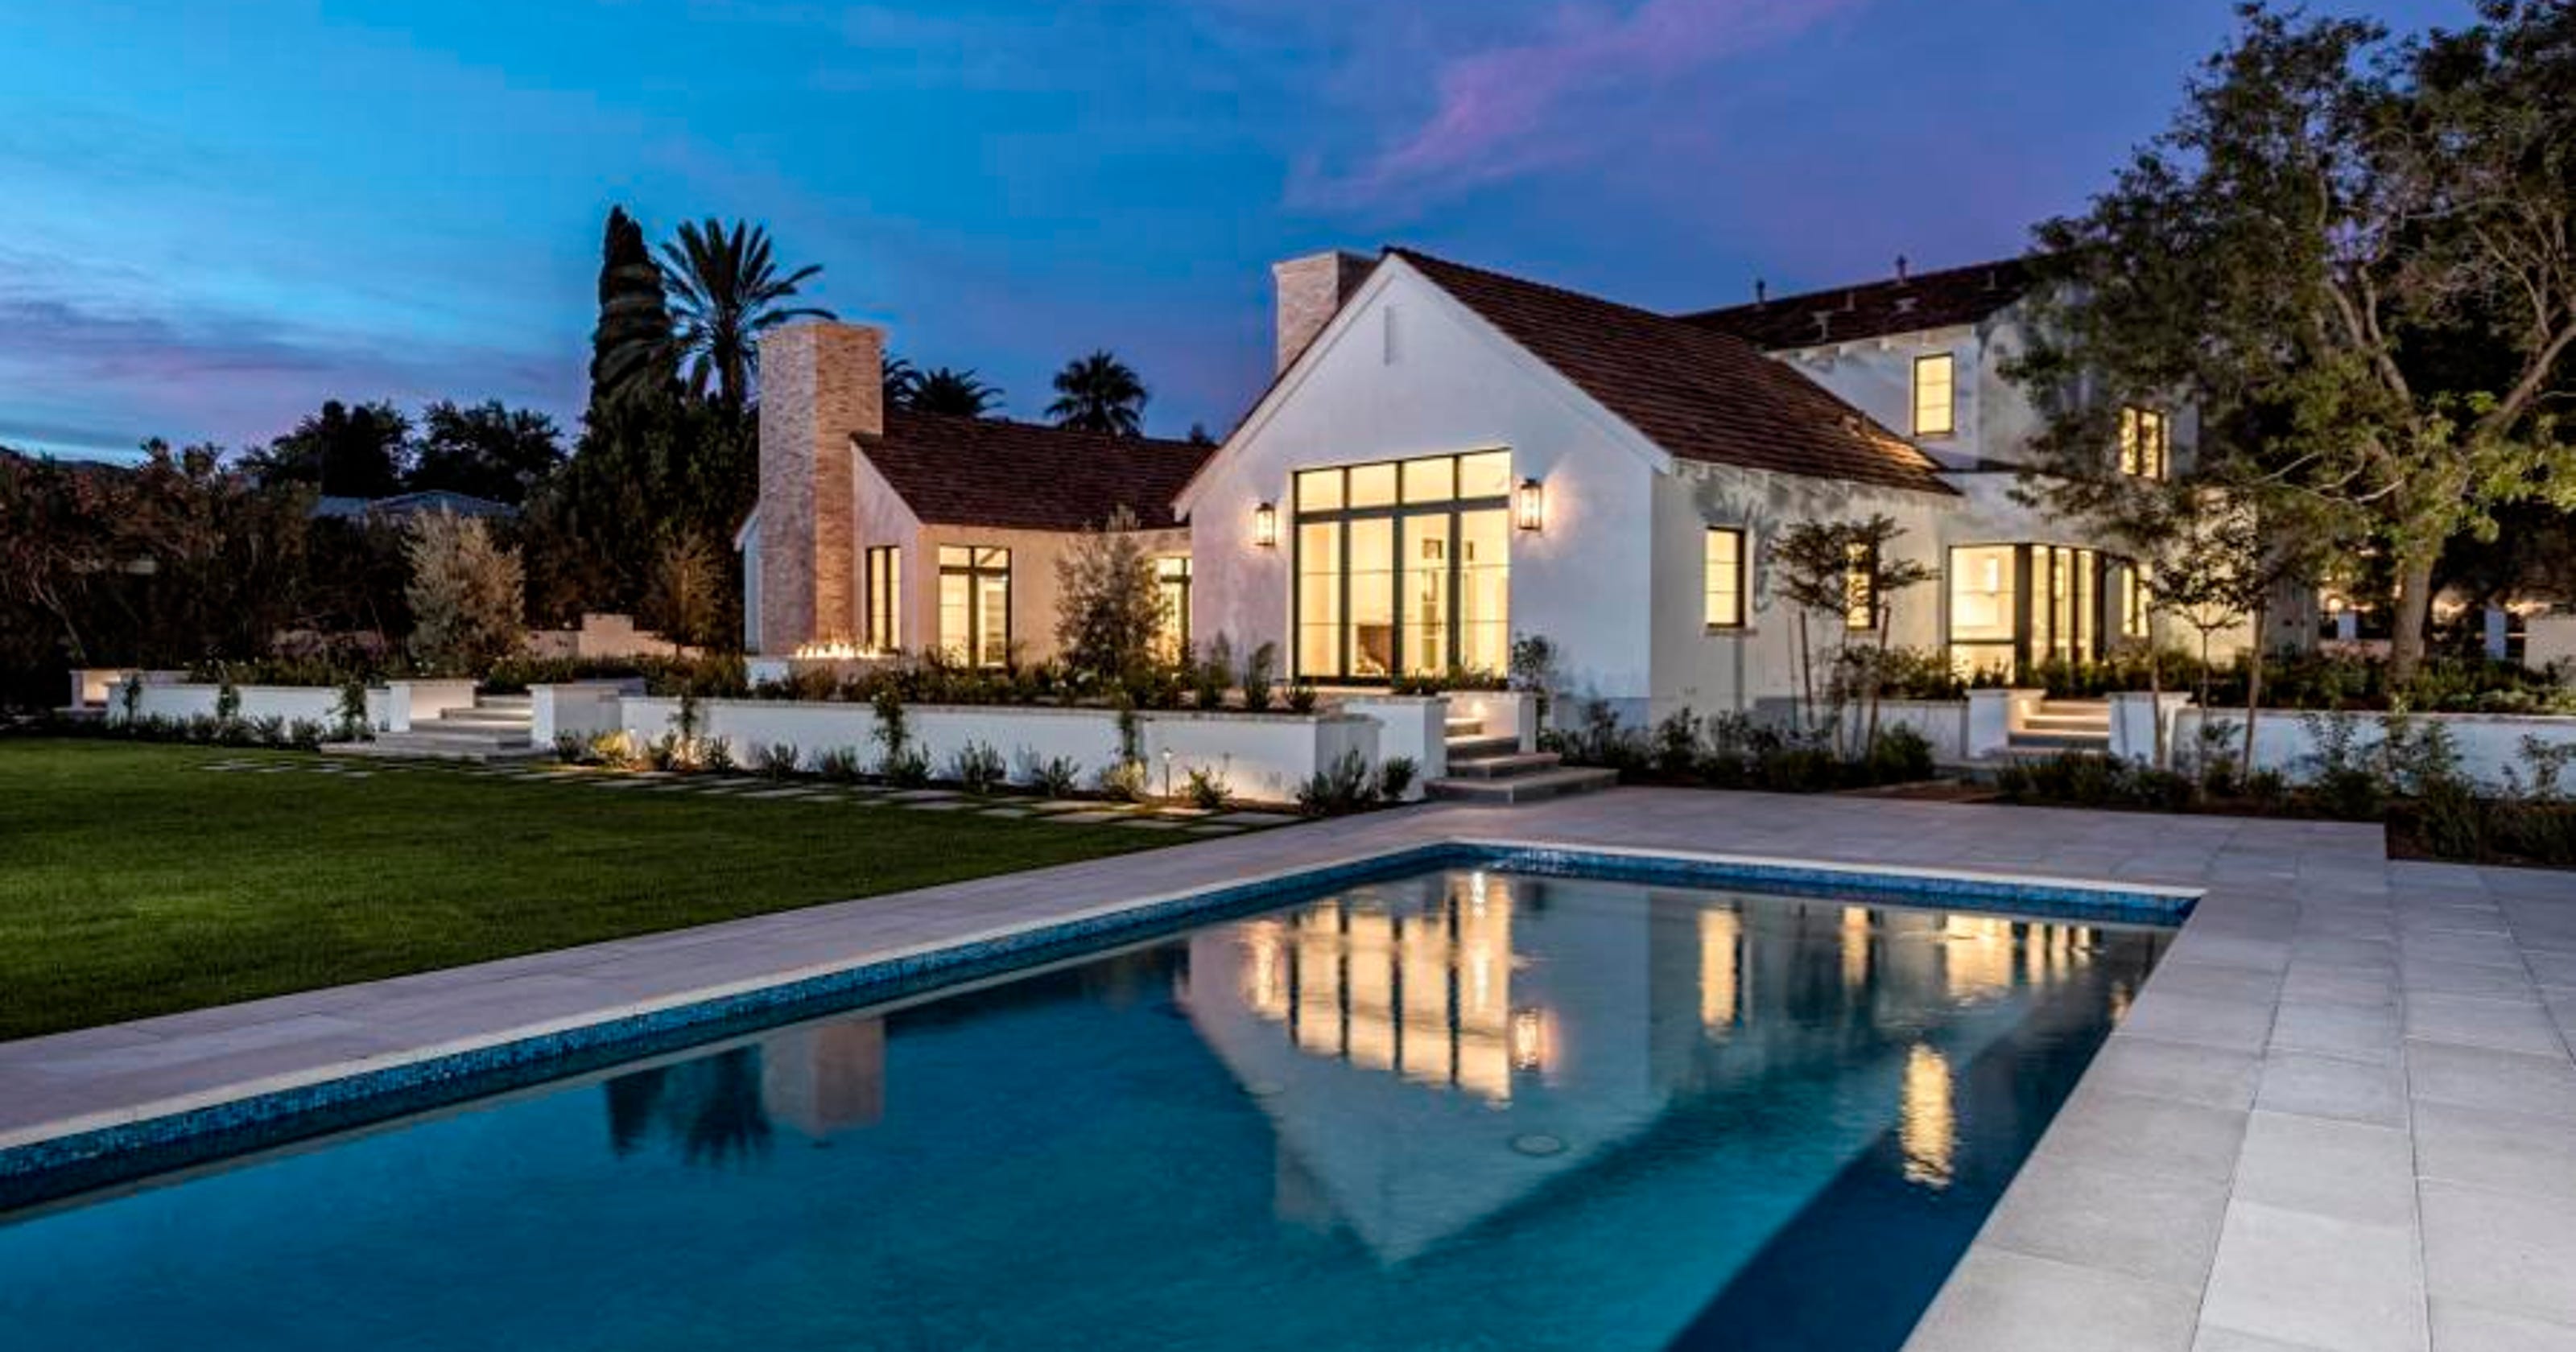 Luxury homes: $4.1M Belgian farmhouse sells in Arcadia